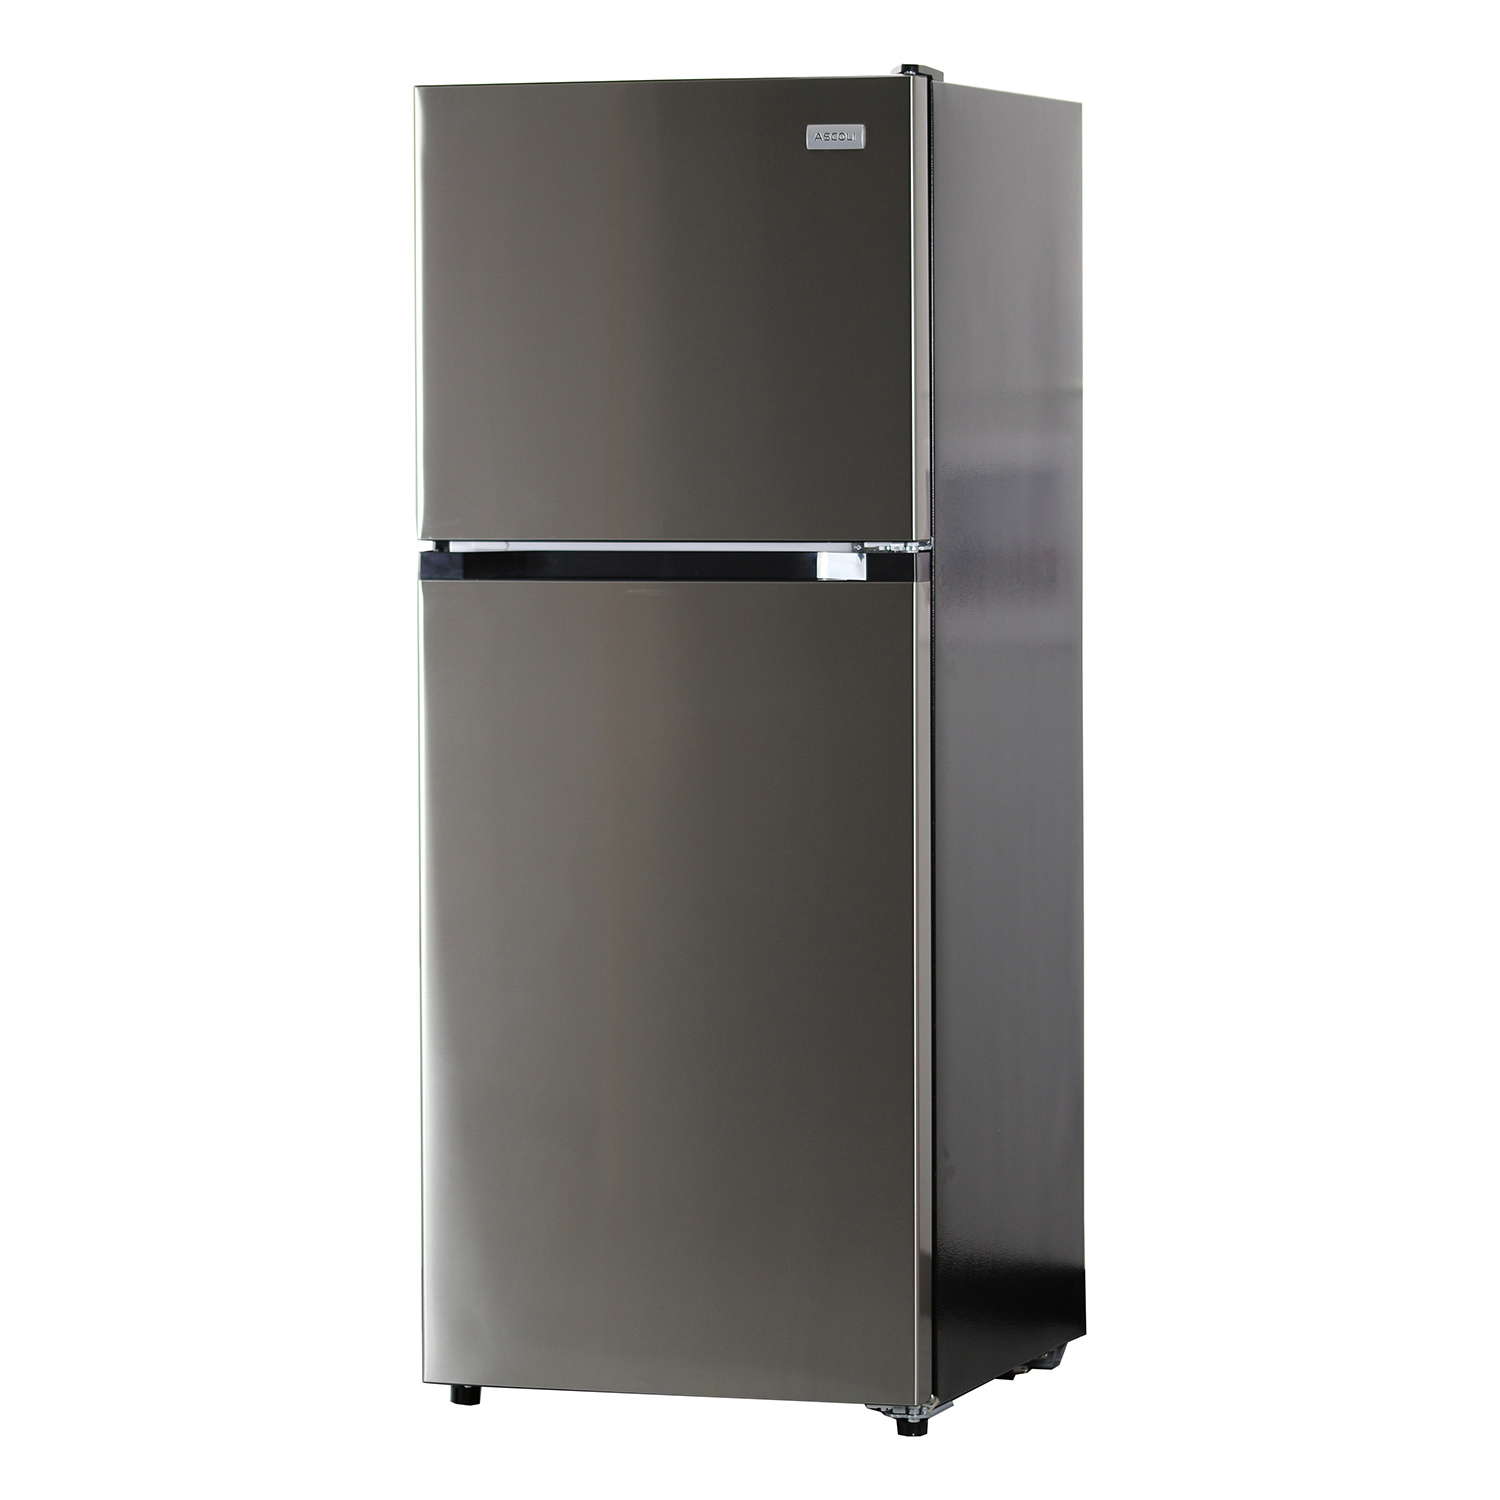 ATFR 1050 ES No Frost <br> Top Mounted Refrigerator